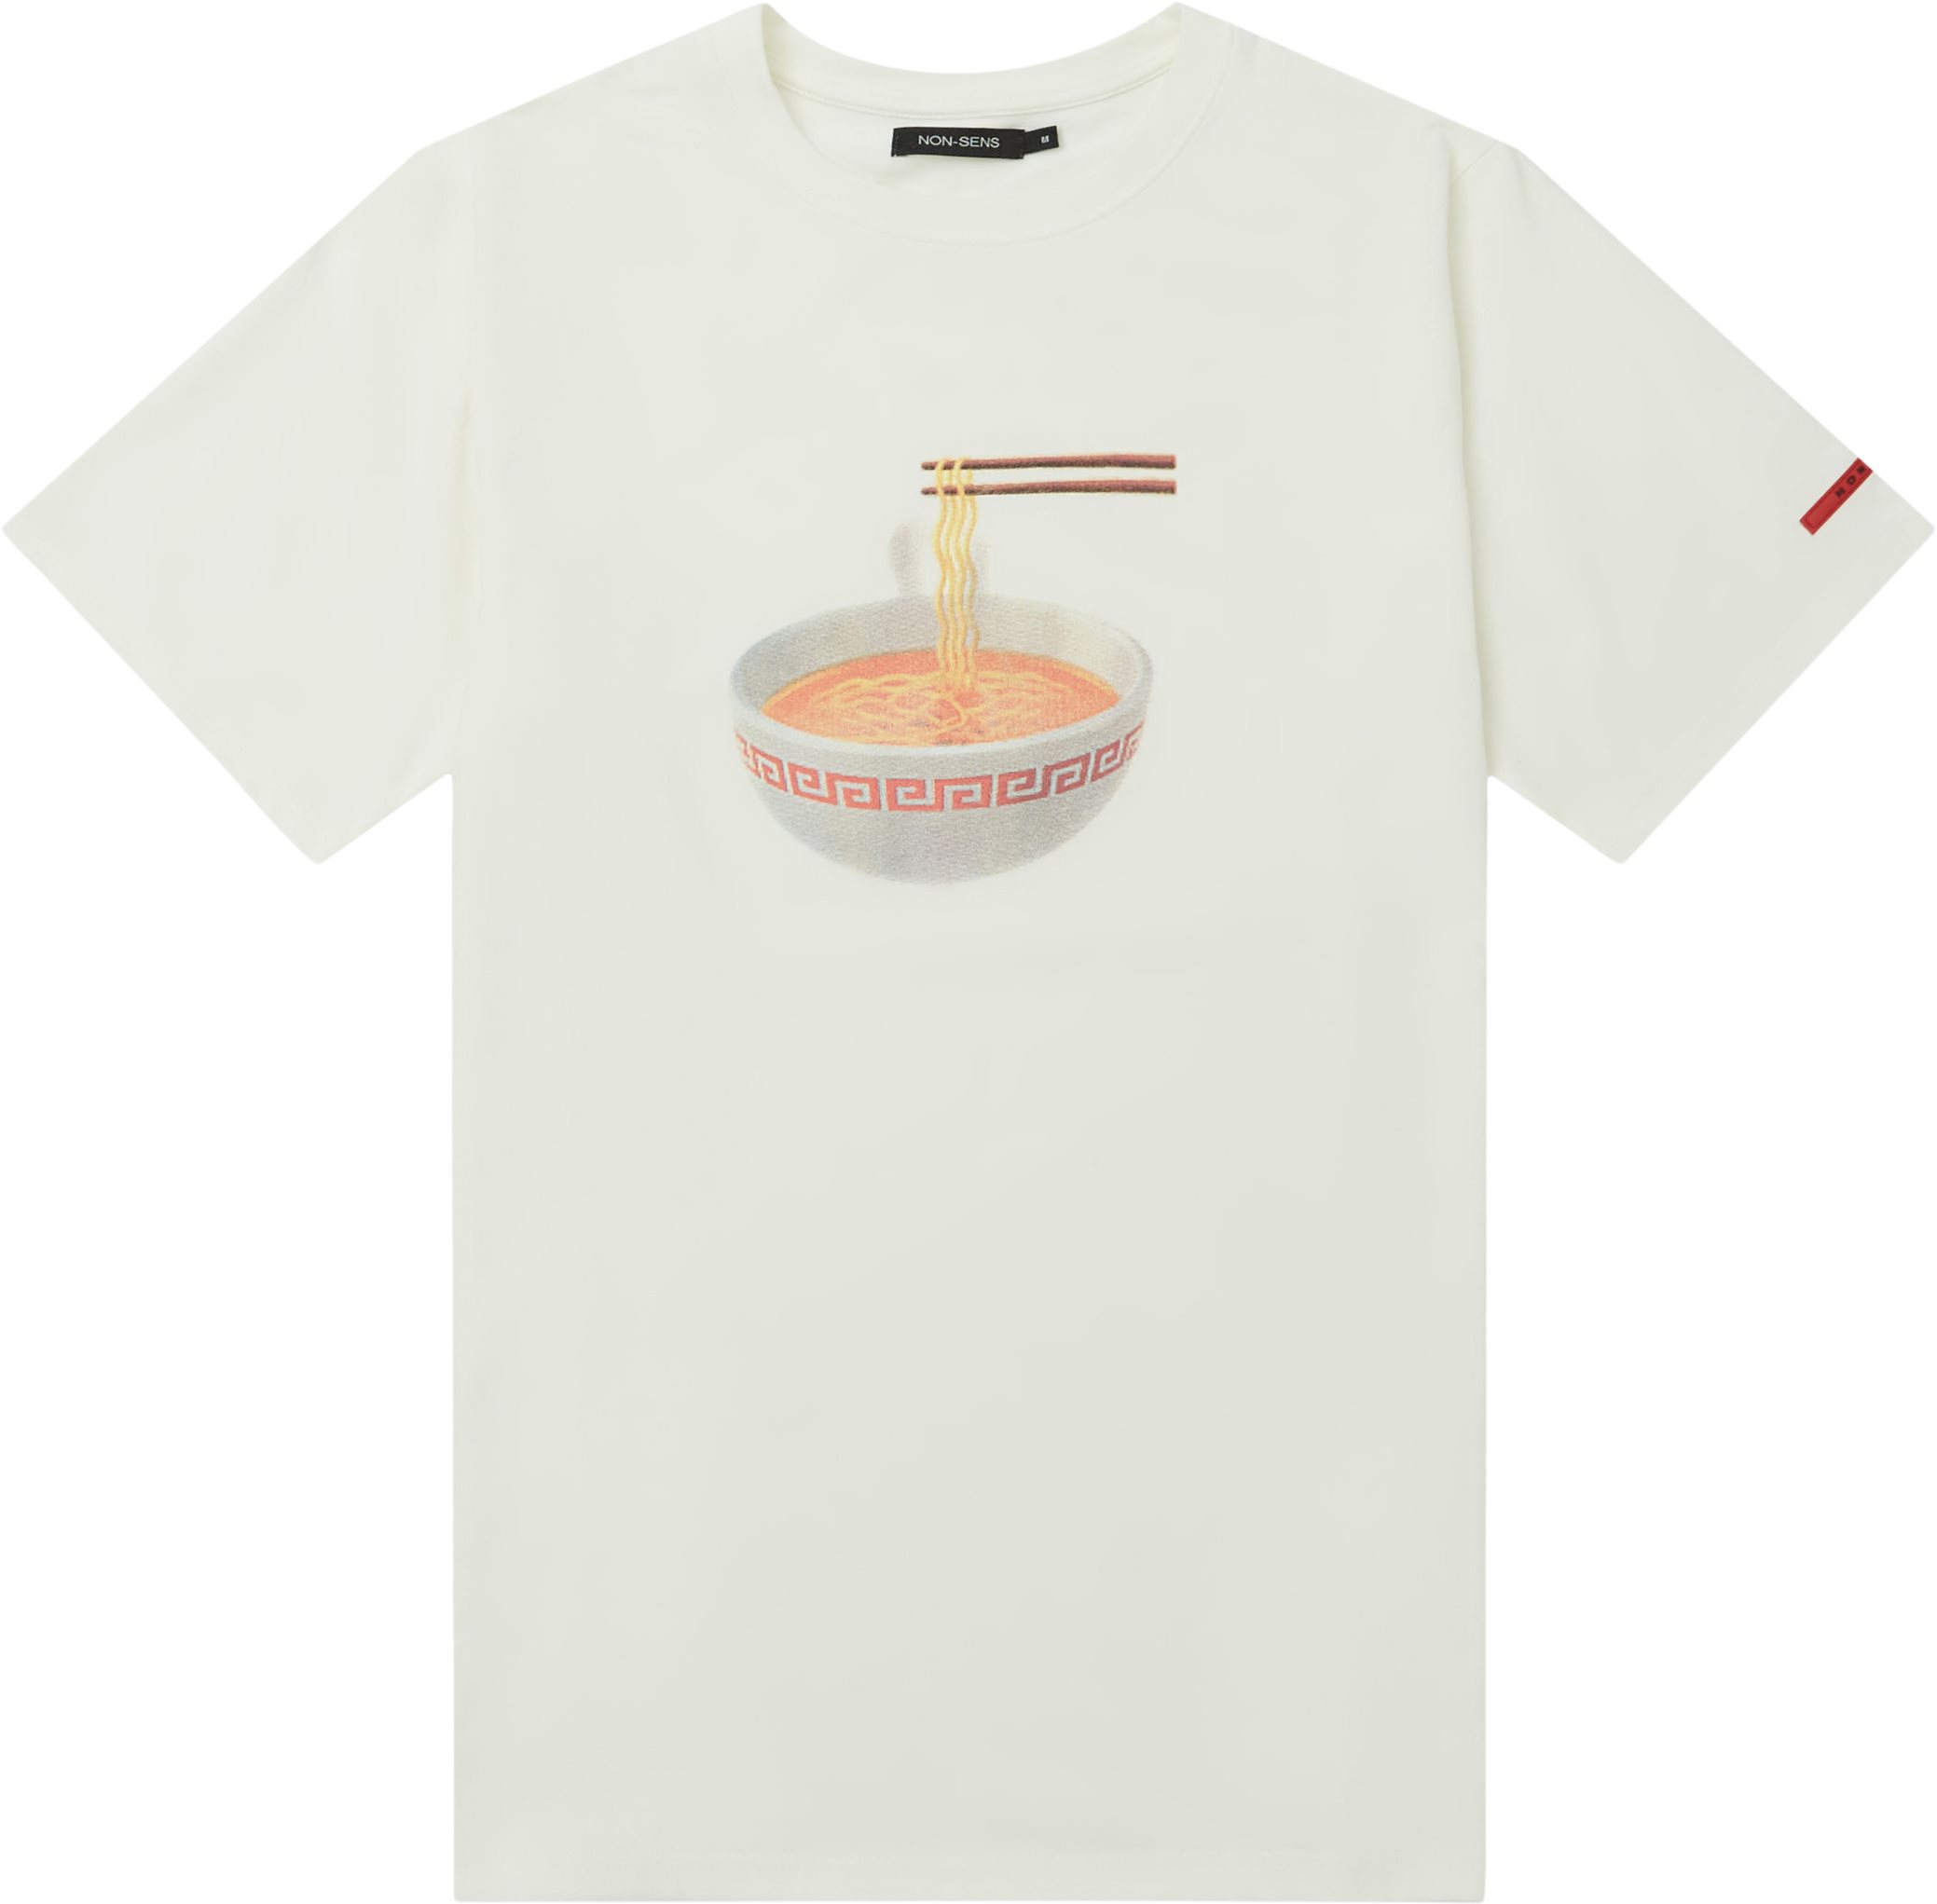 Noodles Tee - T-shirts - Regular fit - Sand